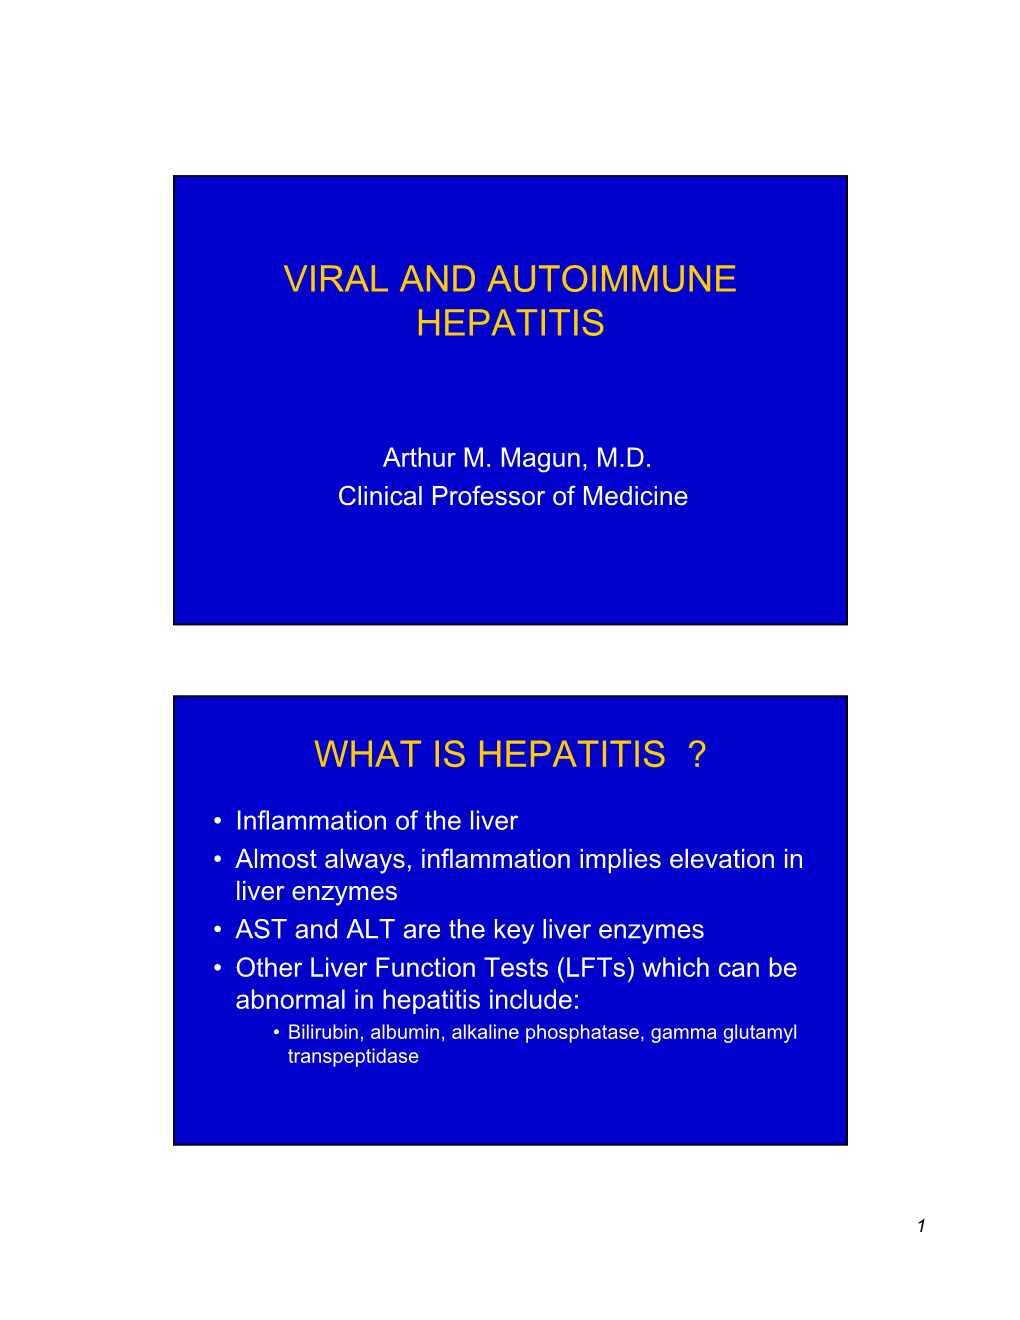 Hepatitis B Virus: Morphology and Characteristics